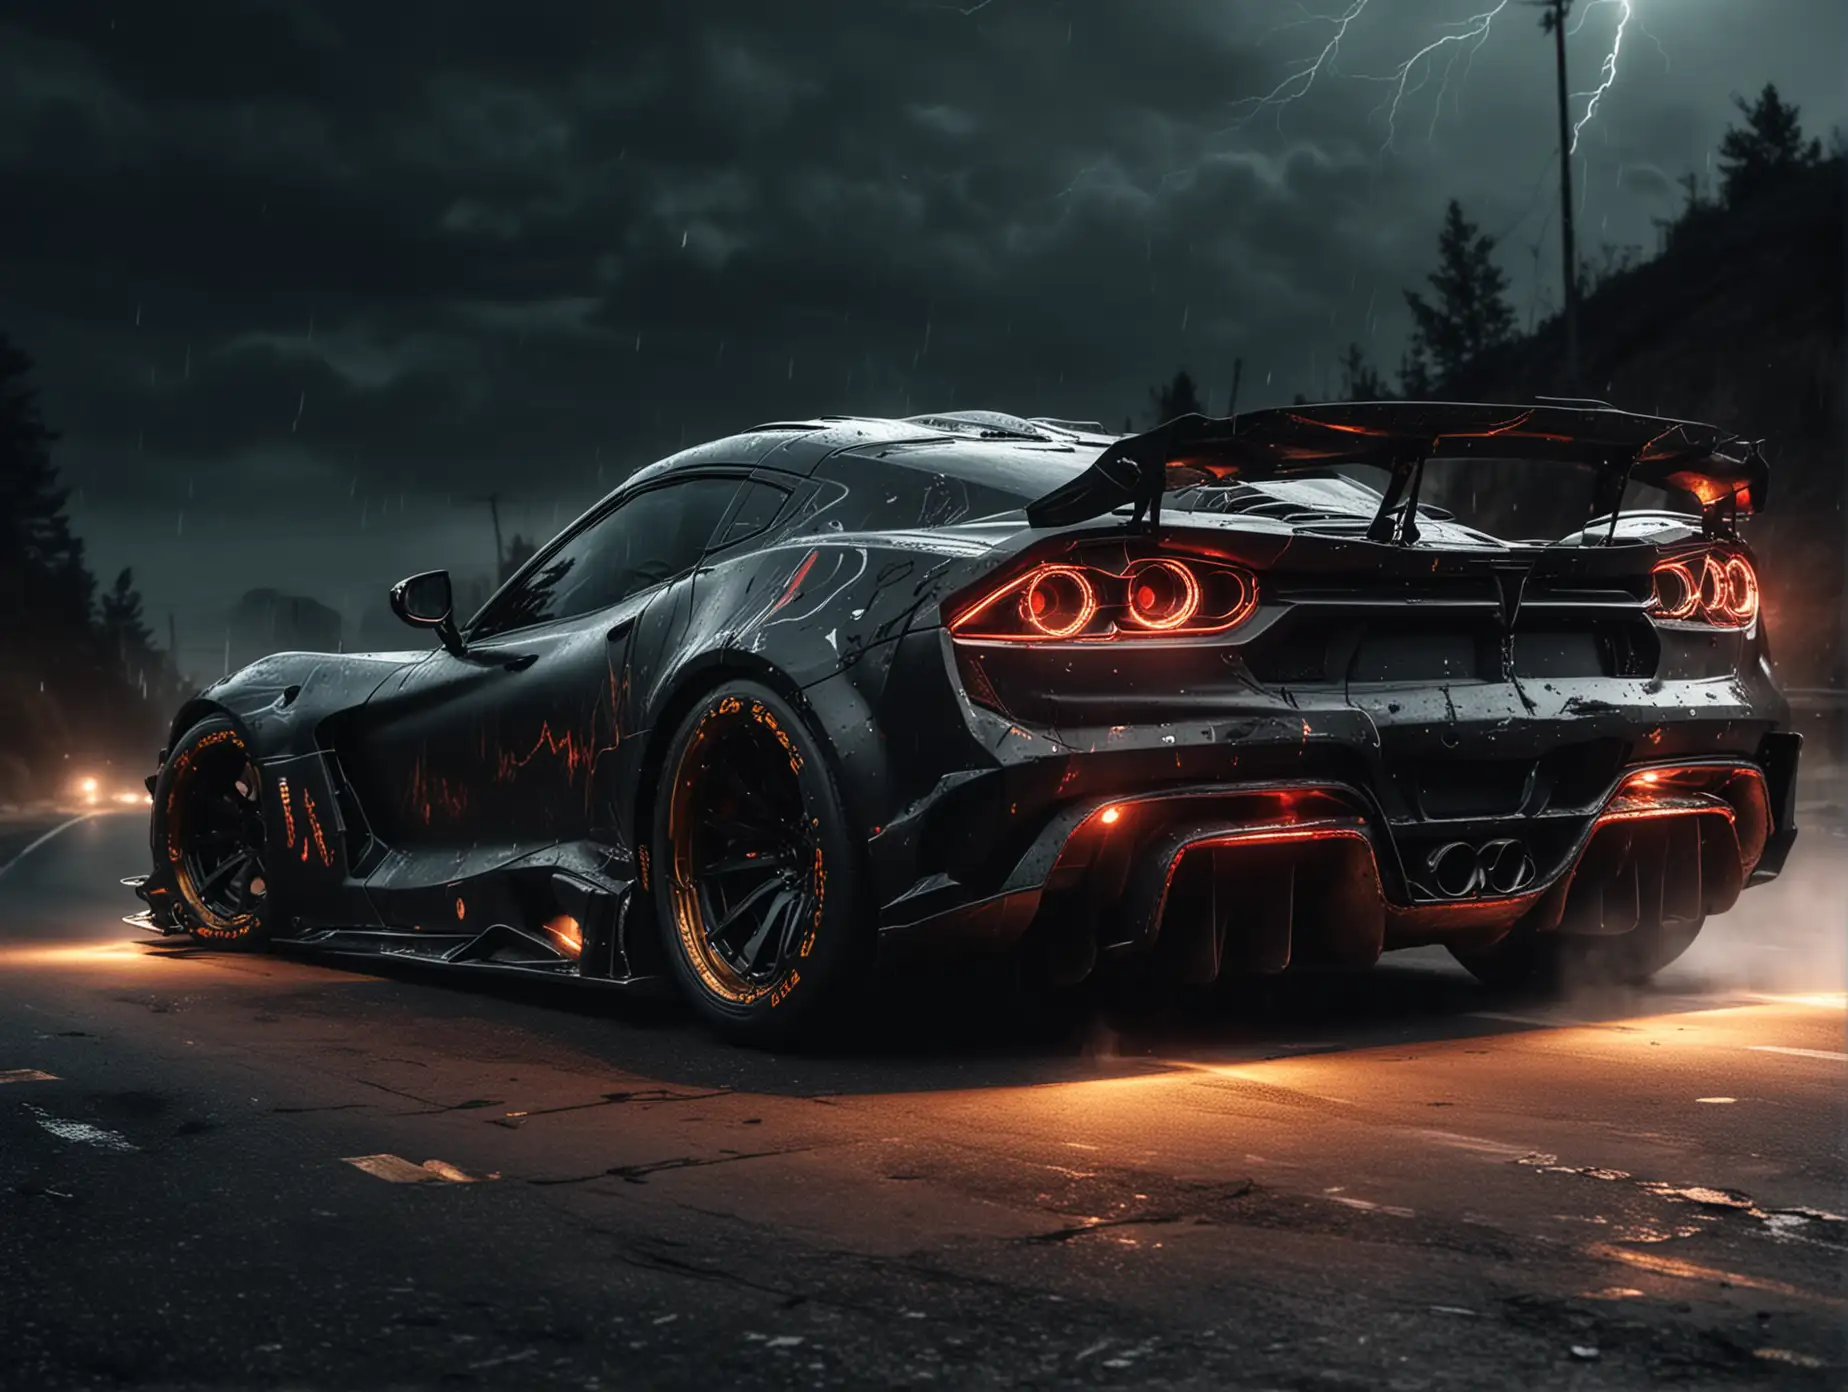 Futuristic-Evil-Venom-Sport-Cars-Drifting-at-Night-on-Downhill-Background